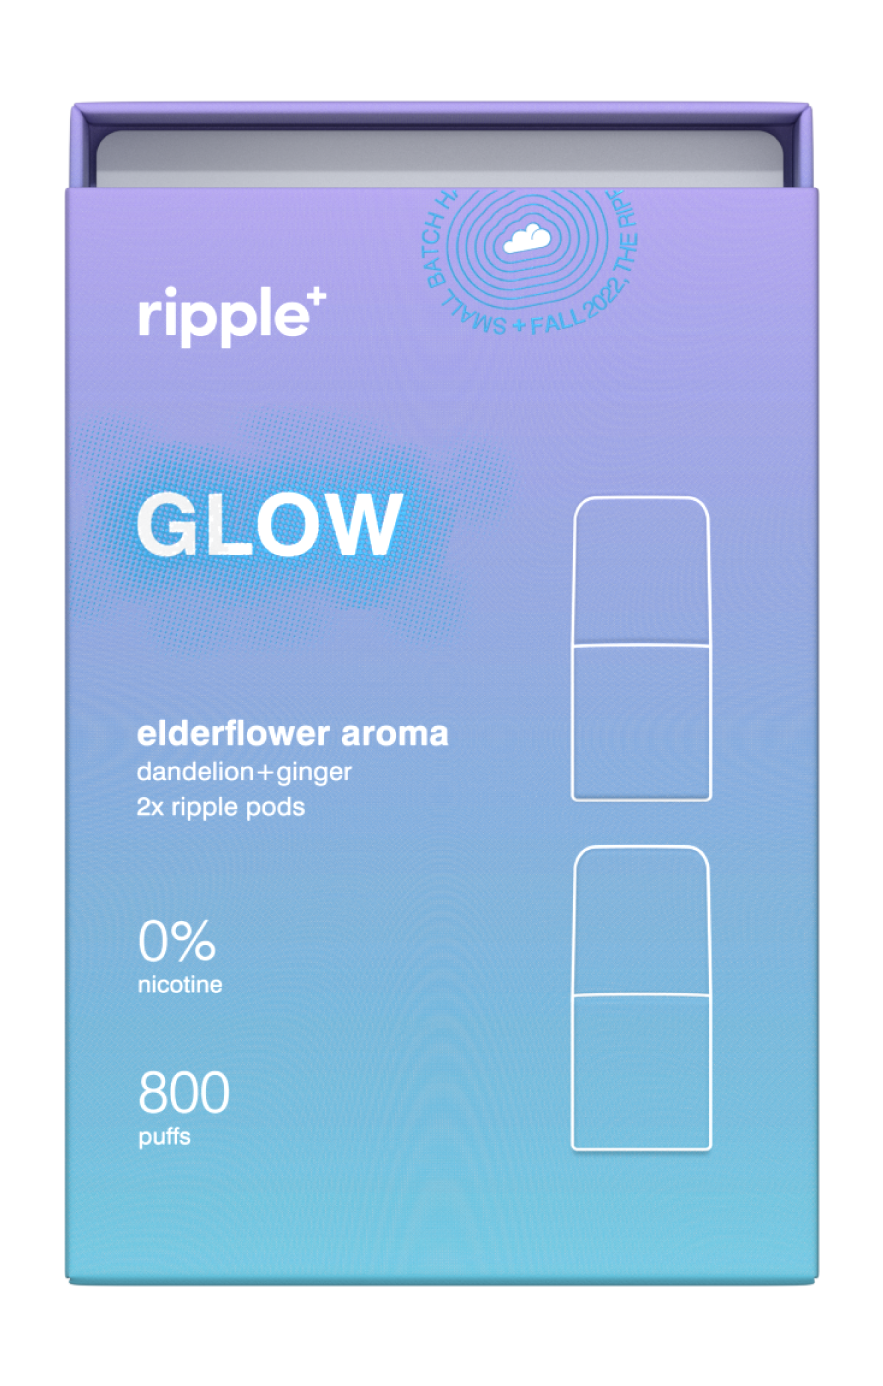 Ripple’s nicotine free elderflower diffuser, GLOW